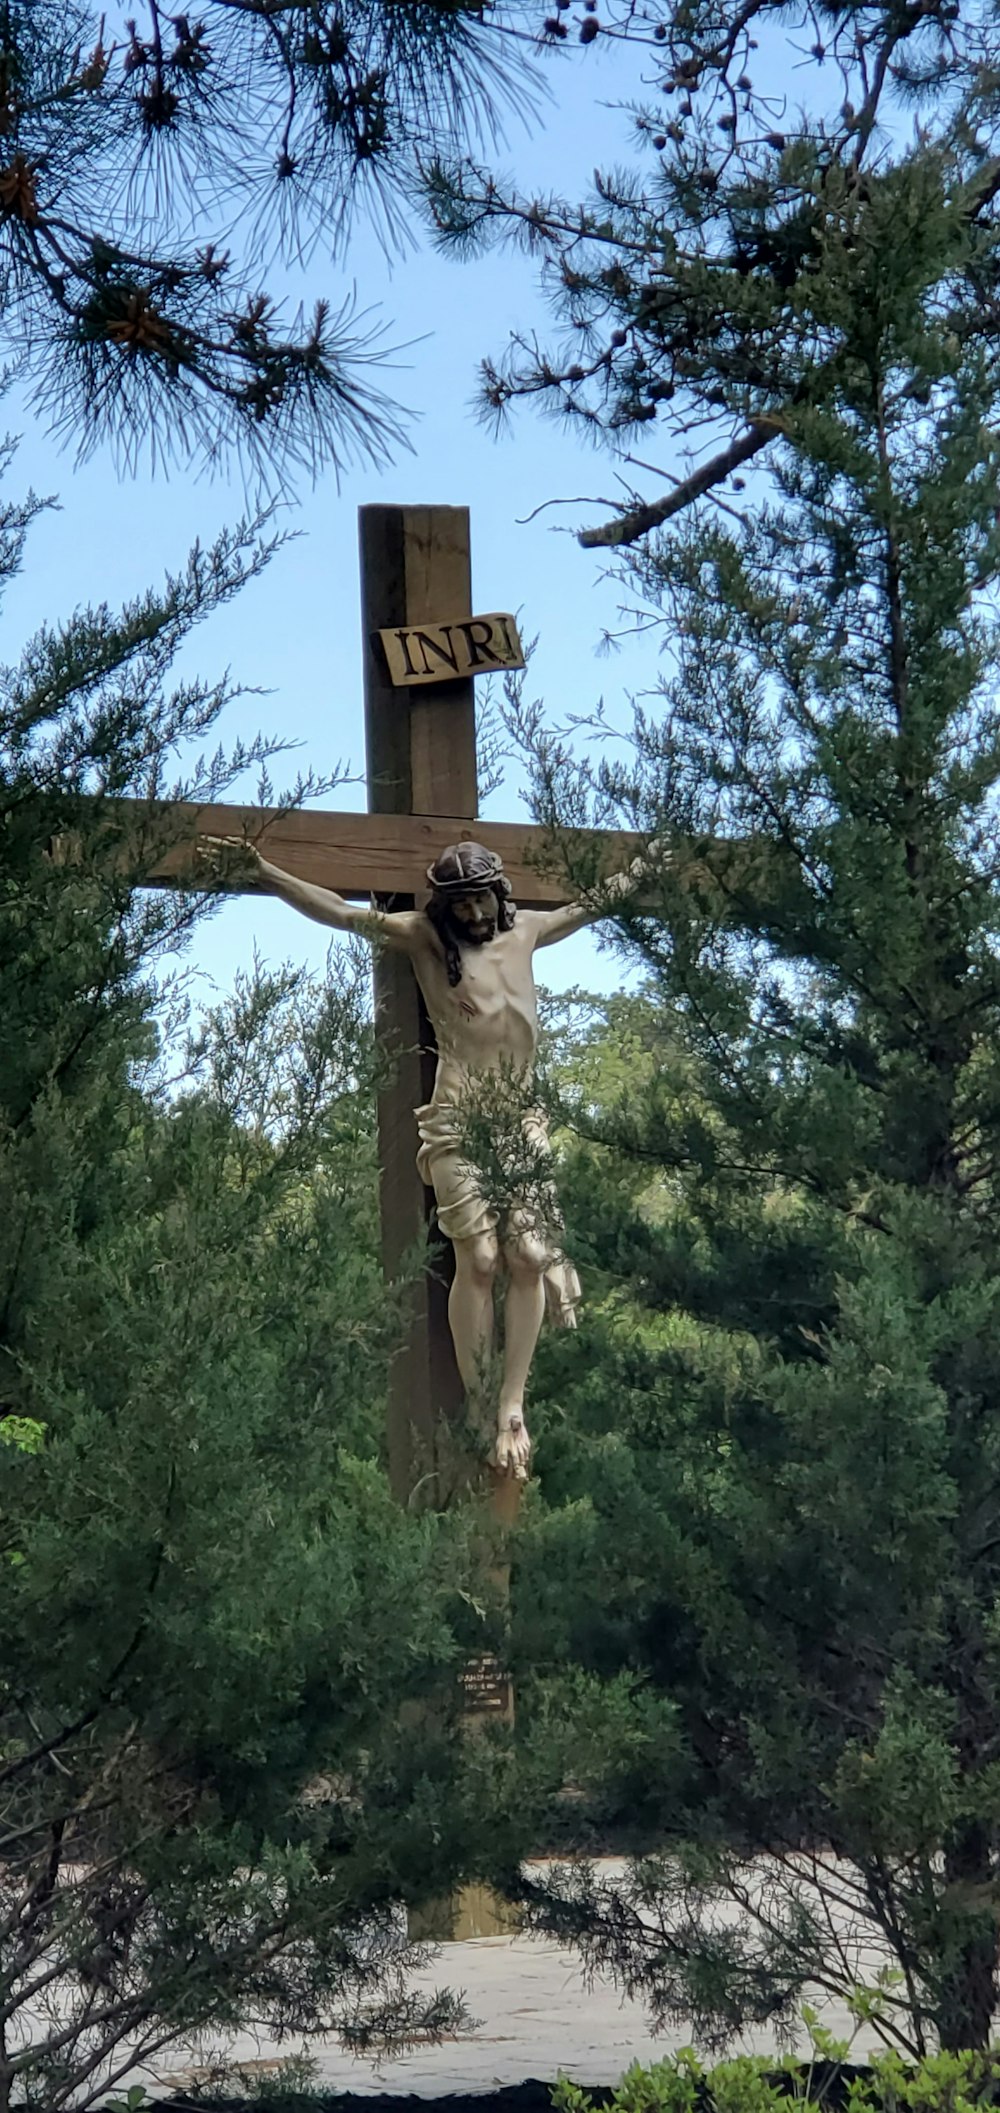 una estatua de una persona sosteniendo una cruz